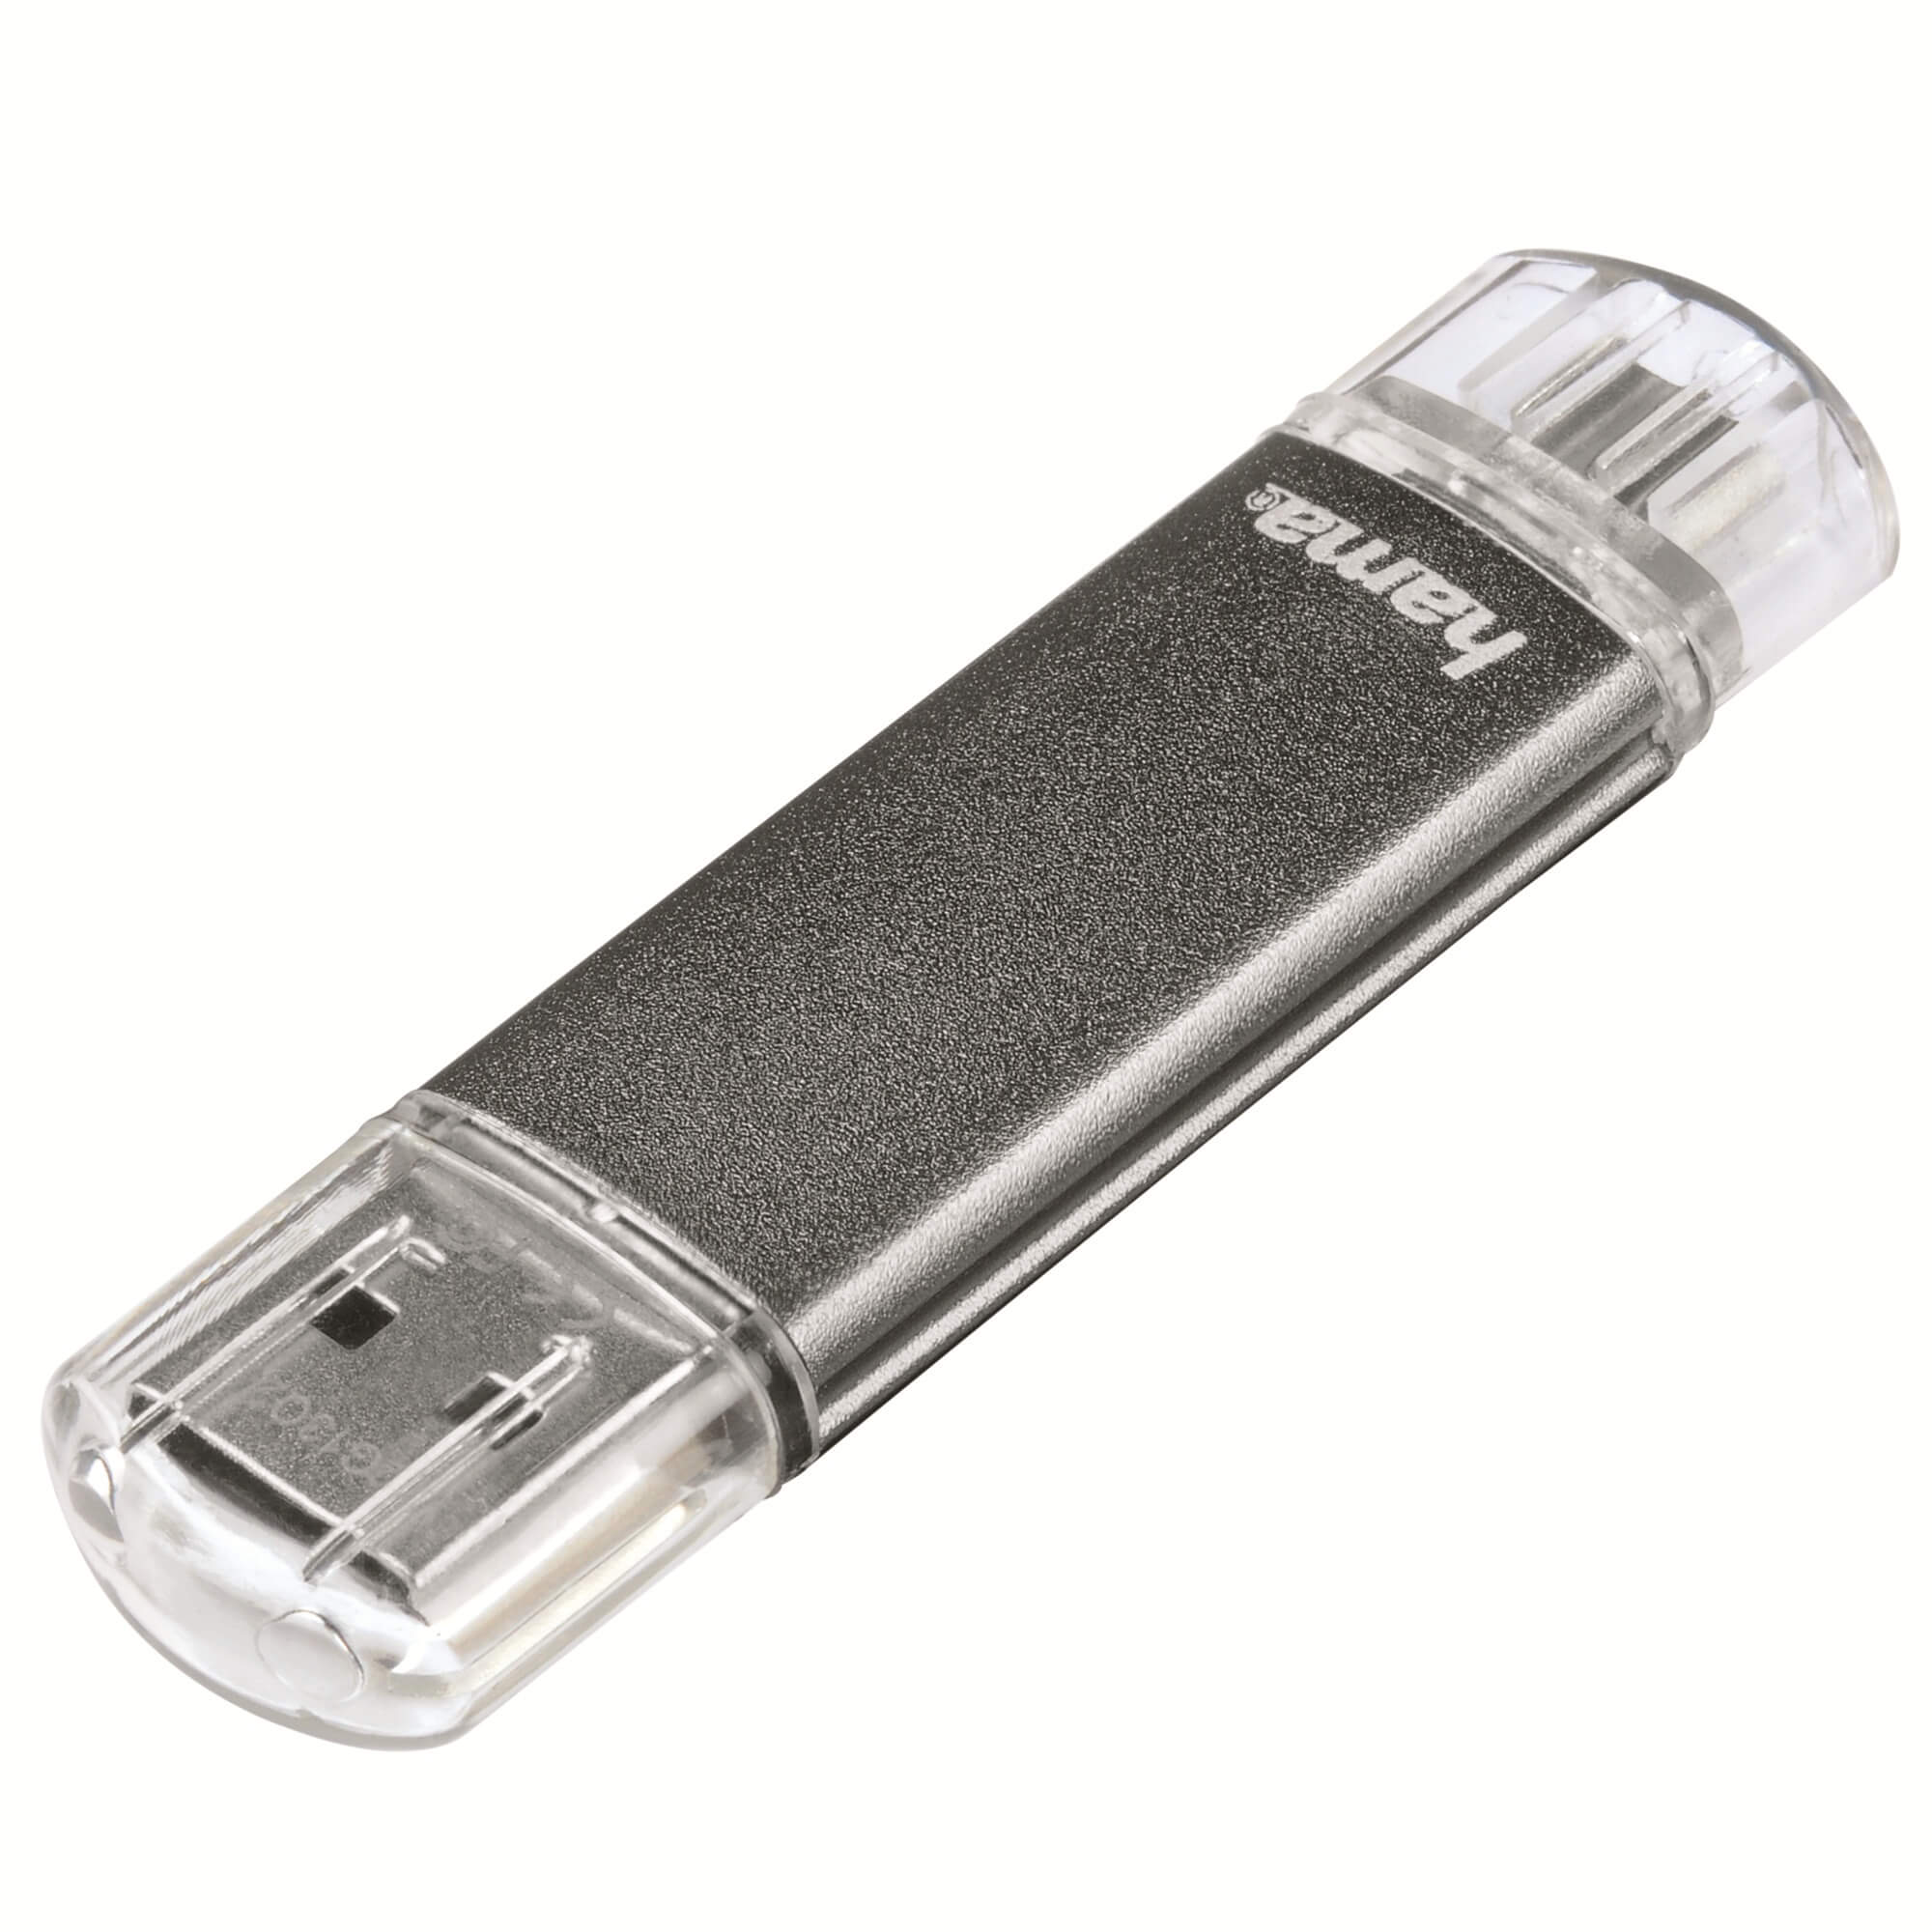  Memorie USB Hama 123923 Laeta Twin, 8GB, OTG, USB 2.0, Gri 